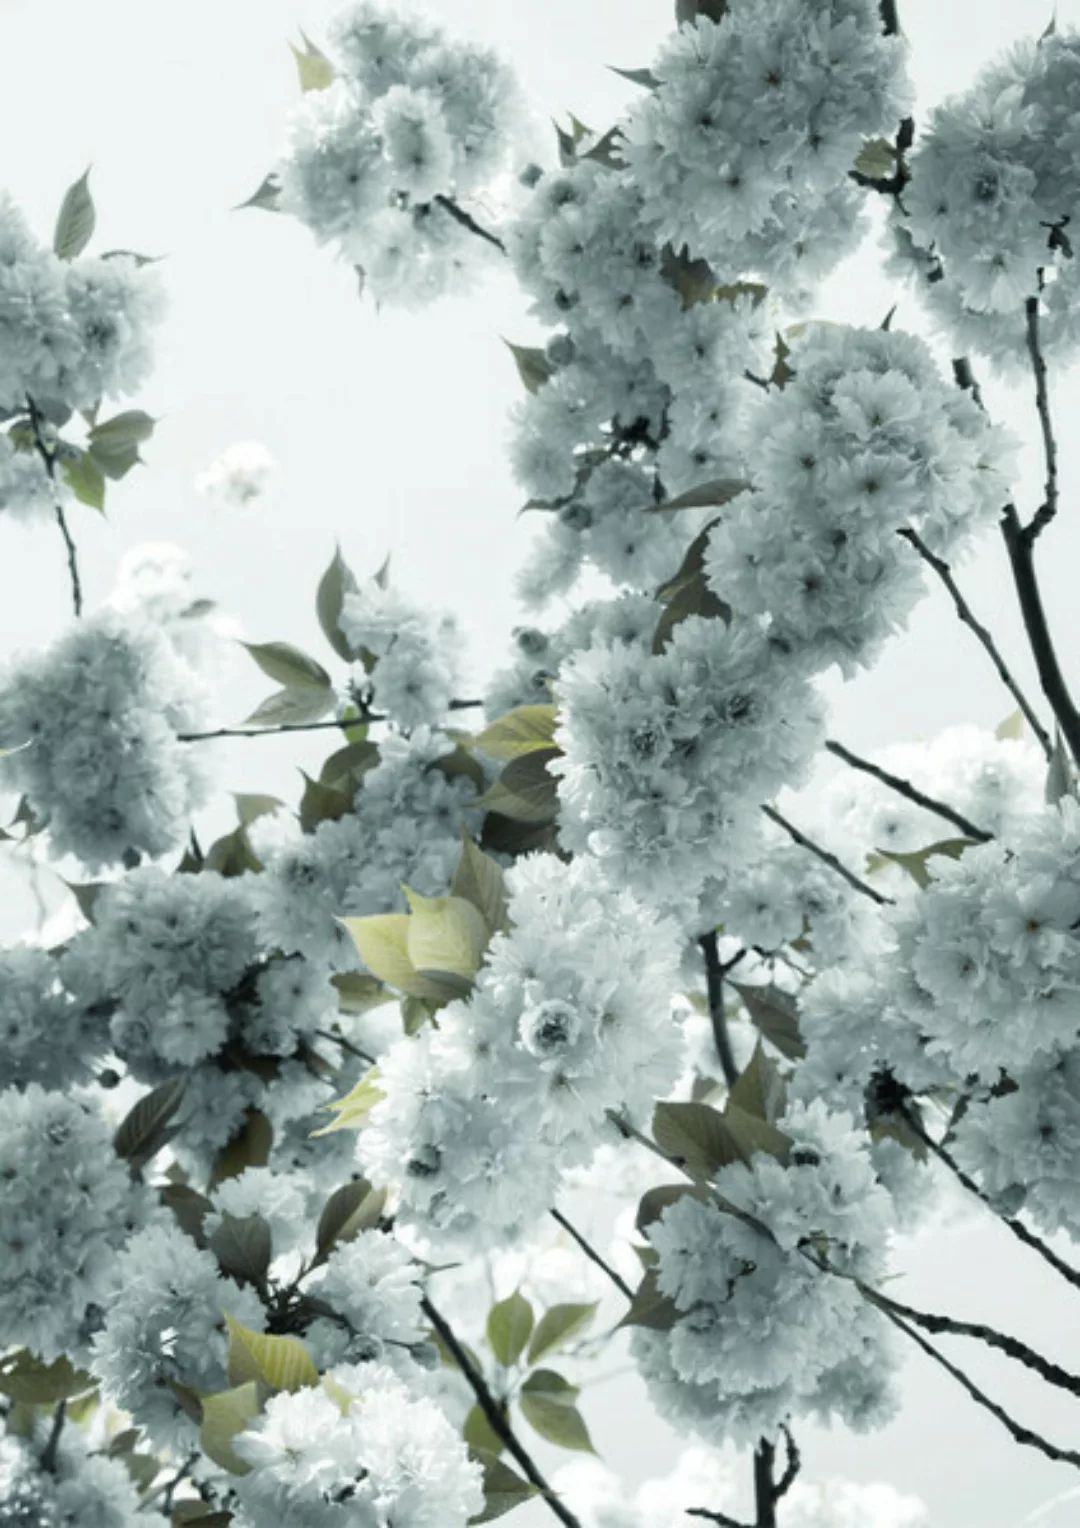 Poster / Leinwandbild - White Spring Blossoms günstig online kaufen